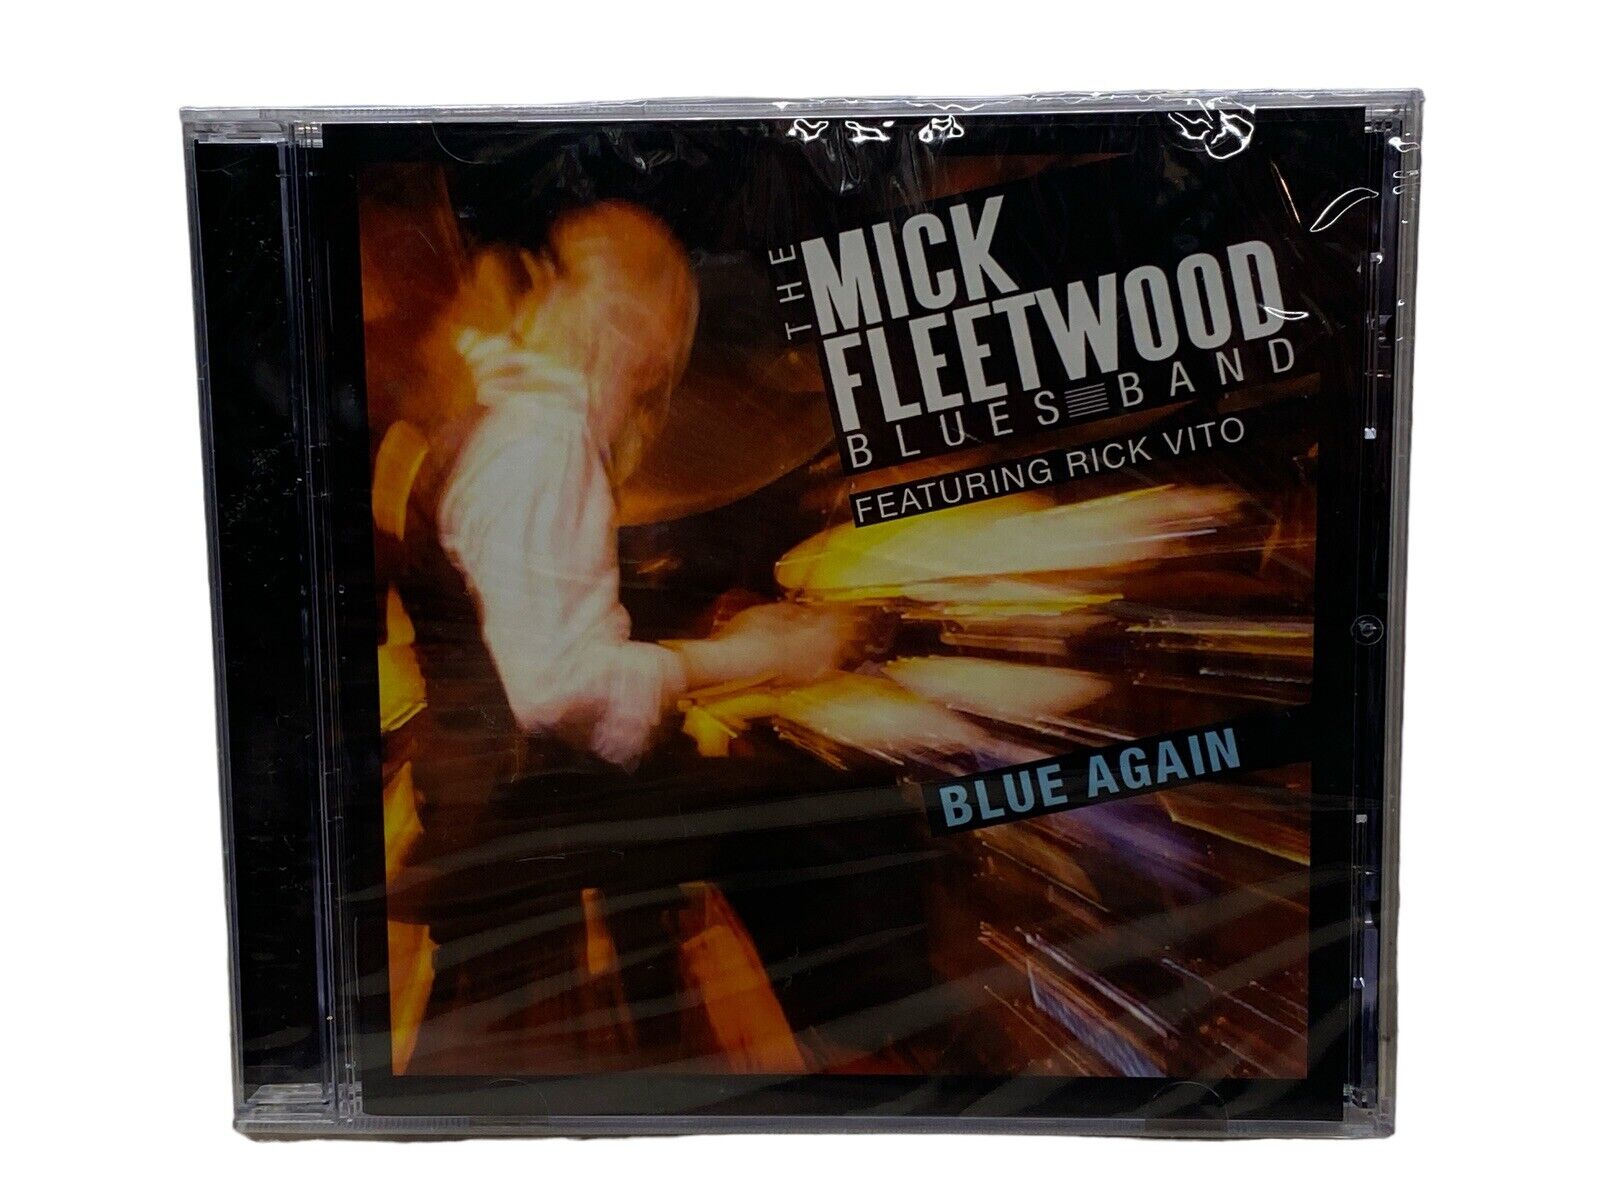 MICK FLEETWOOD BLUES BAND - BLUE AGAIN - TALLMAN - 2009 CD